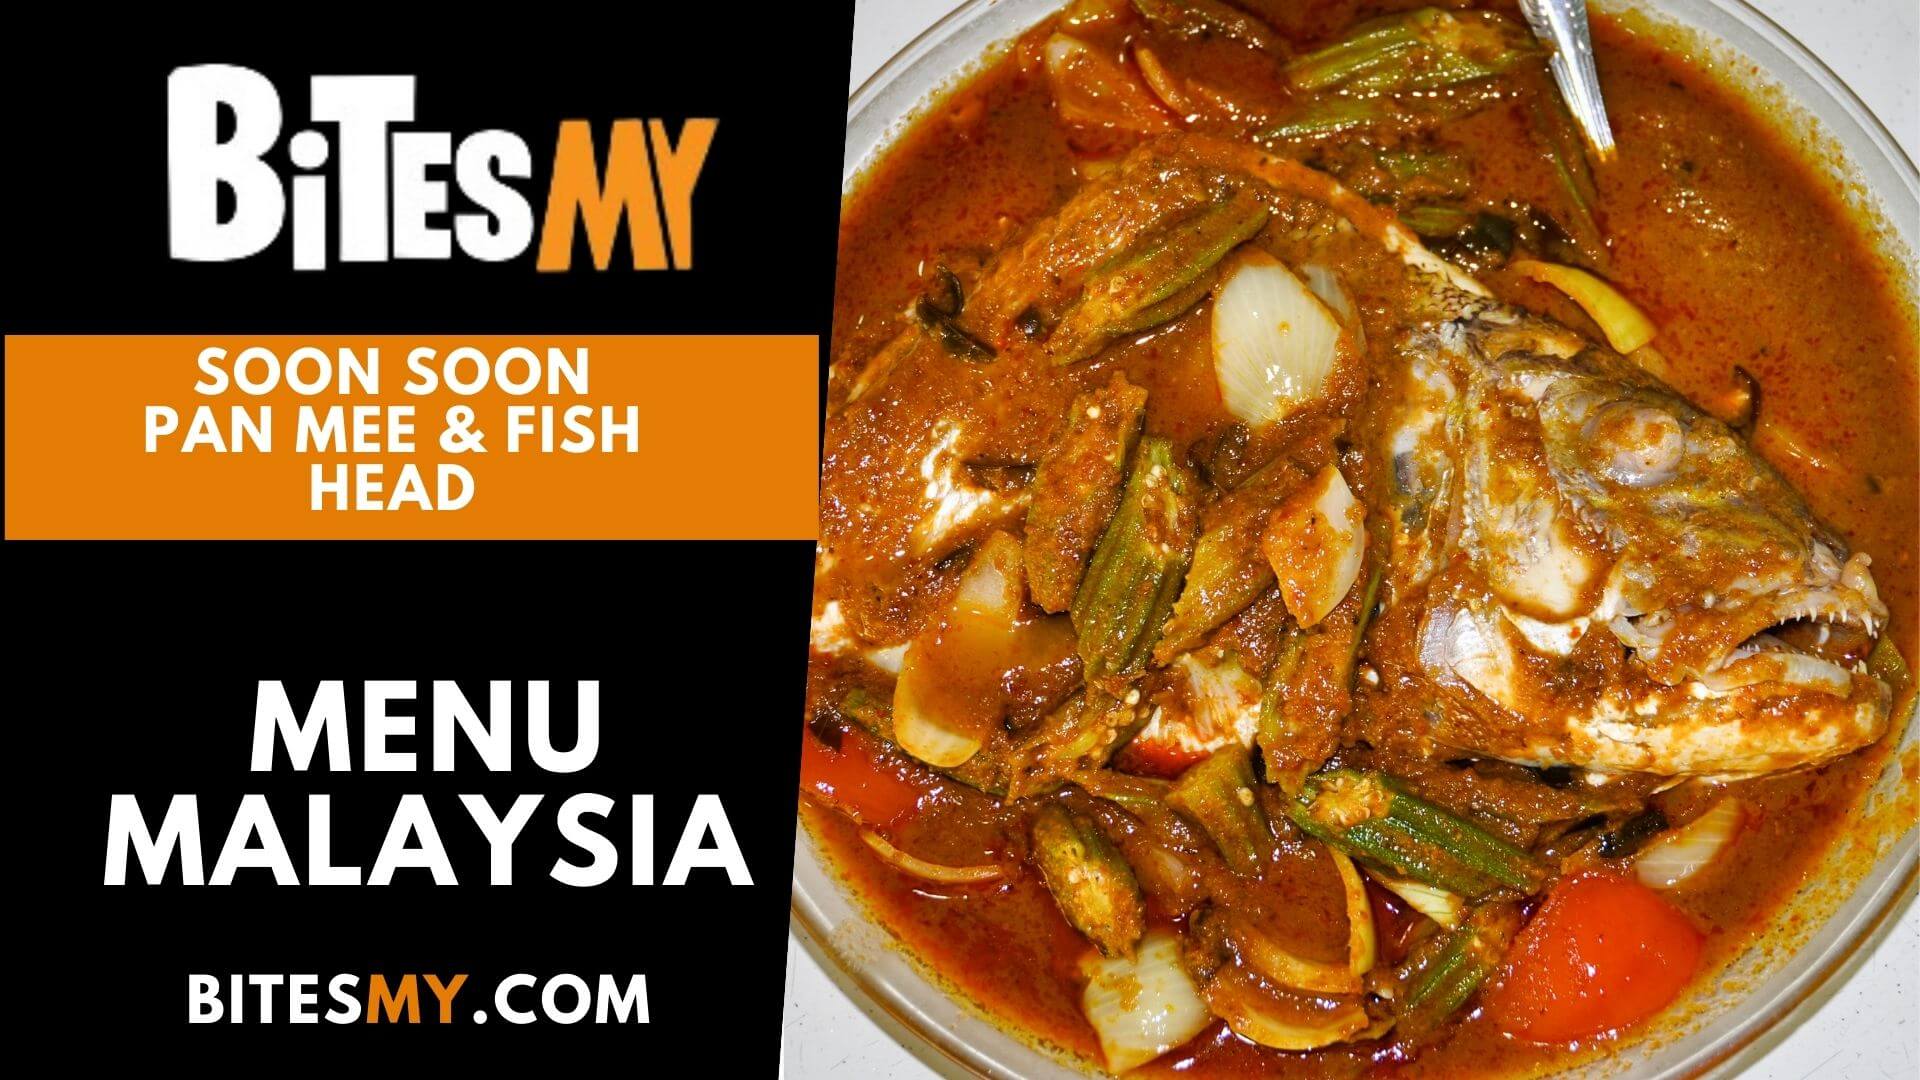 Soon Soon Pan Mee & Fish Head Menu & Price Malaysia